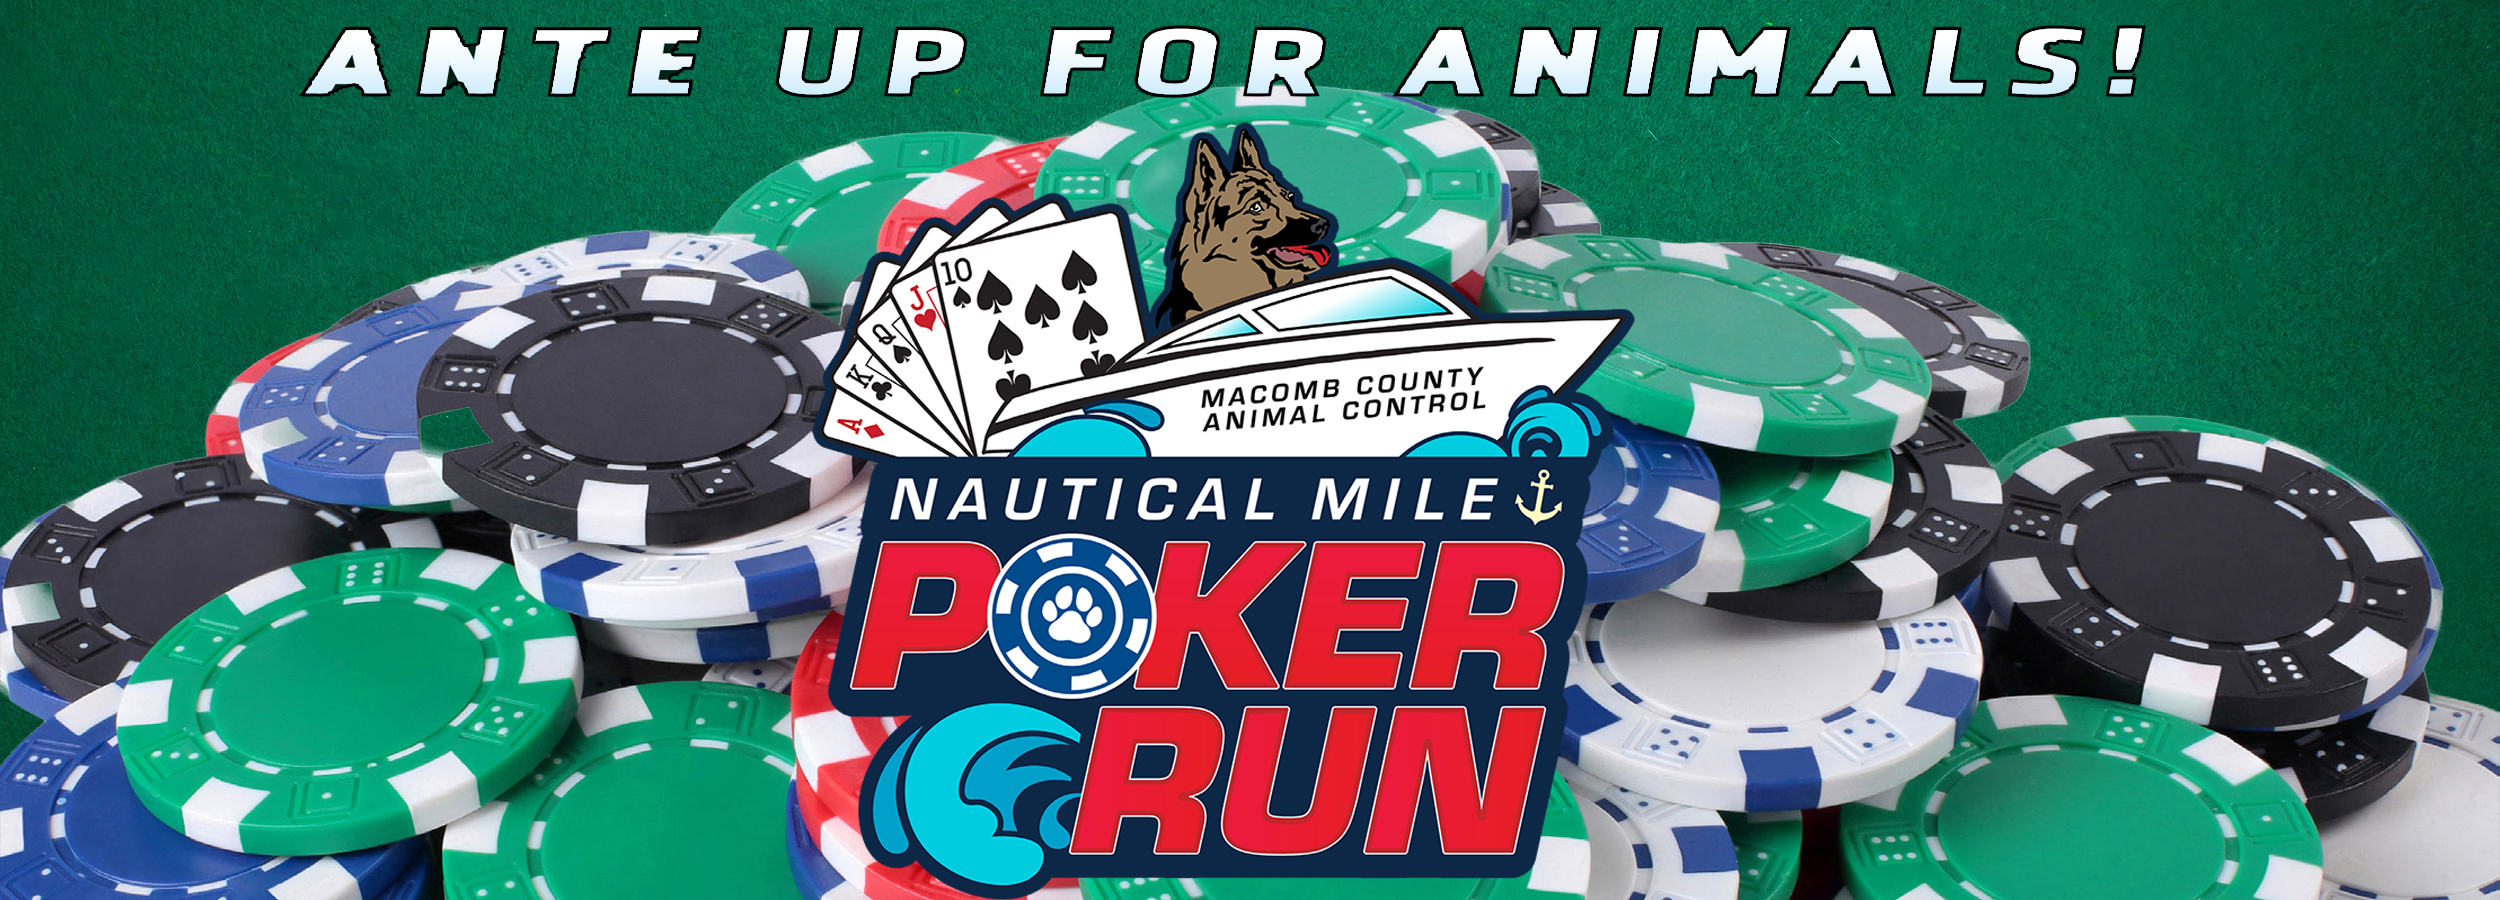 Nautical Mile Poker Run